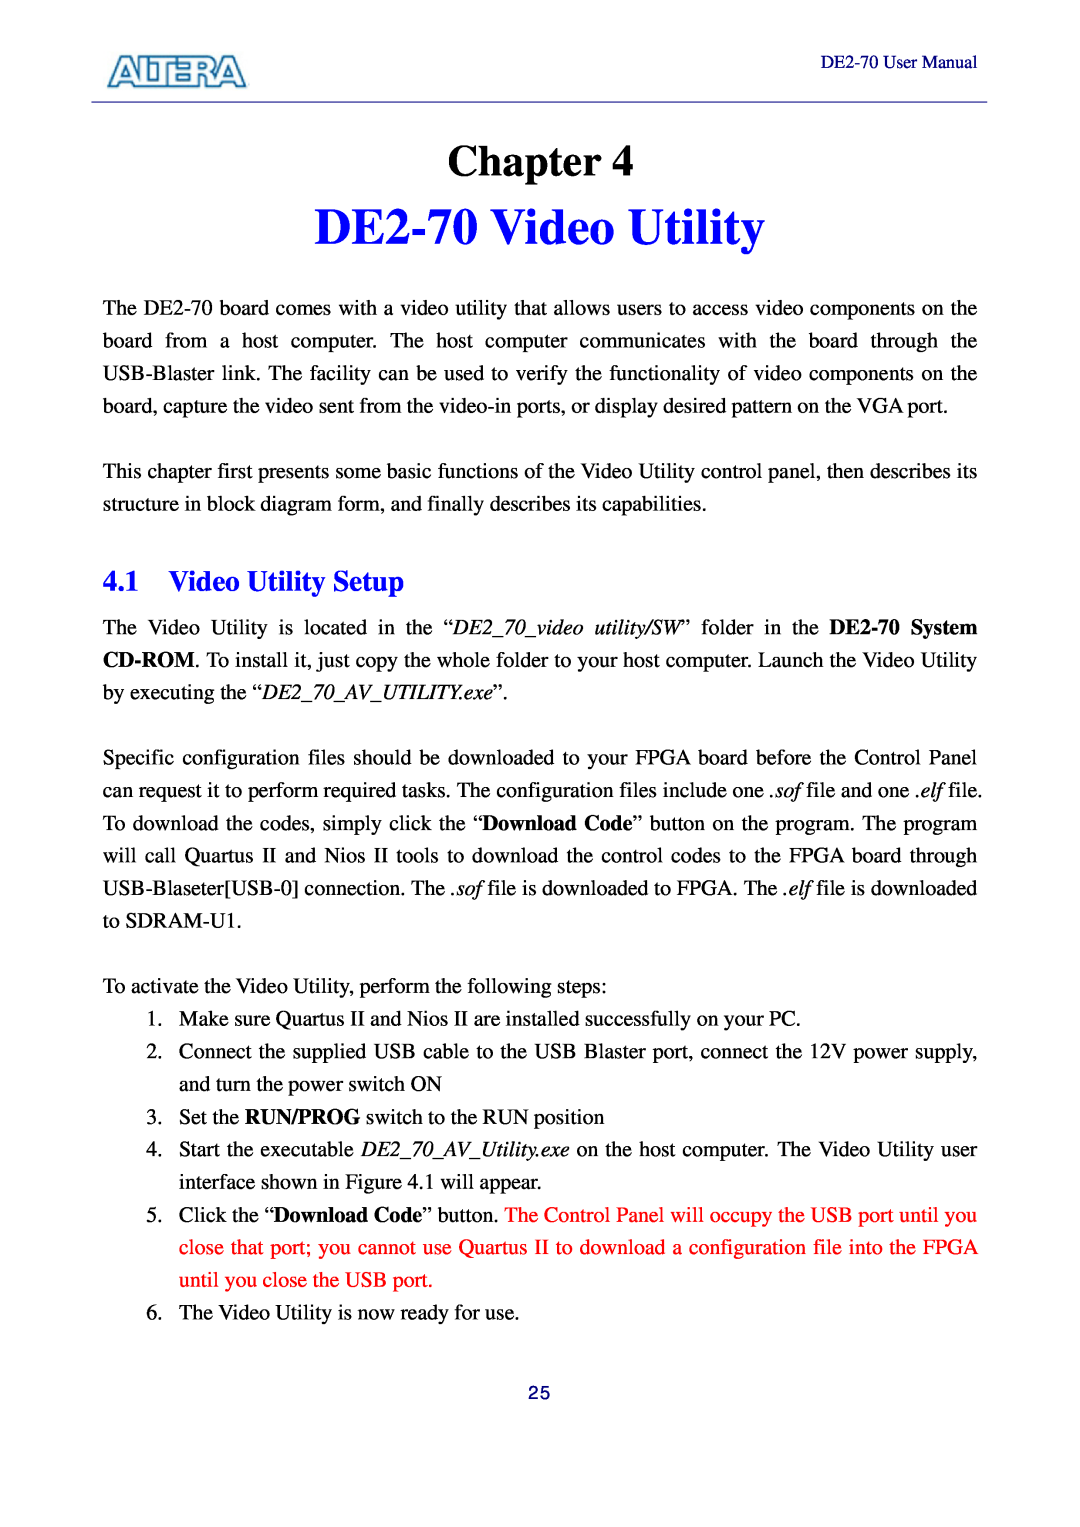 Sigma manual DE2-70 Video Utility, Video Utility Setup, Chapter 